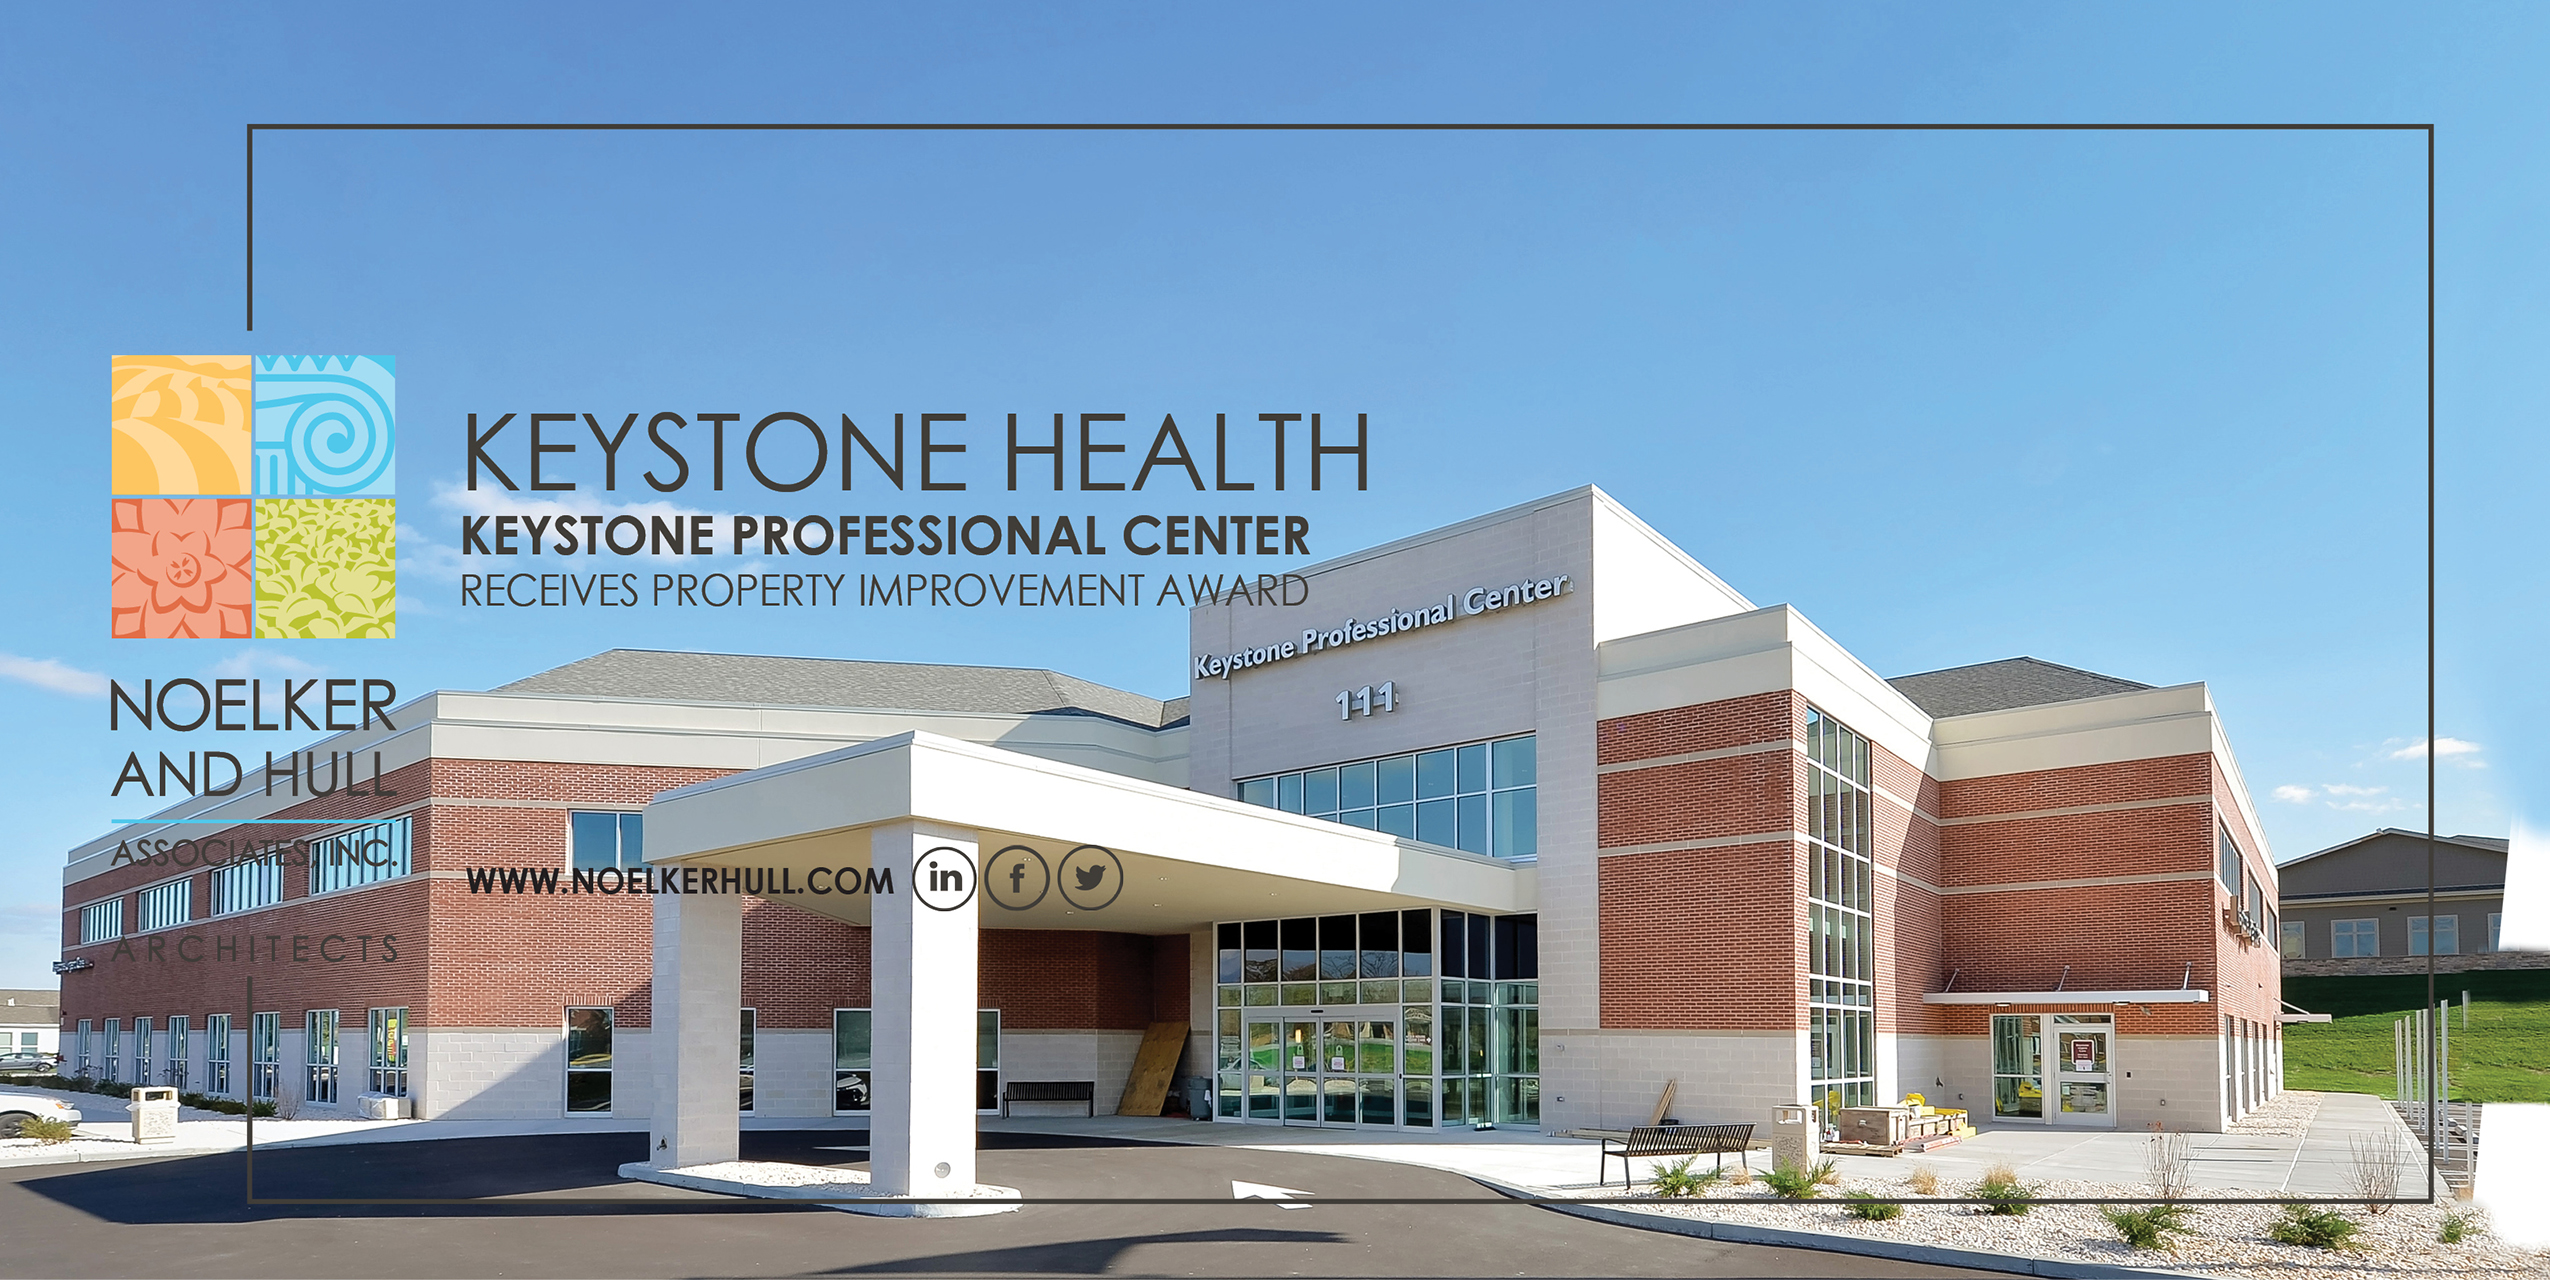 Keystone Health - Property Improvement Award